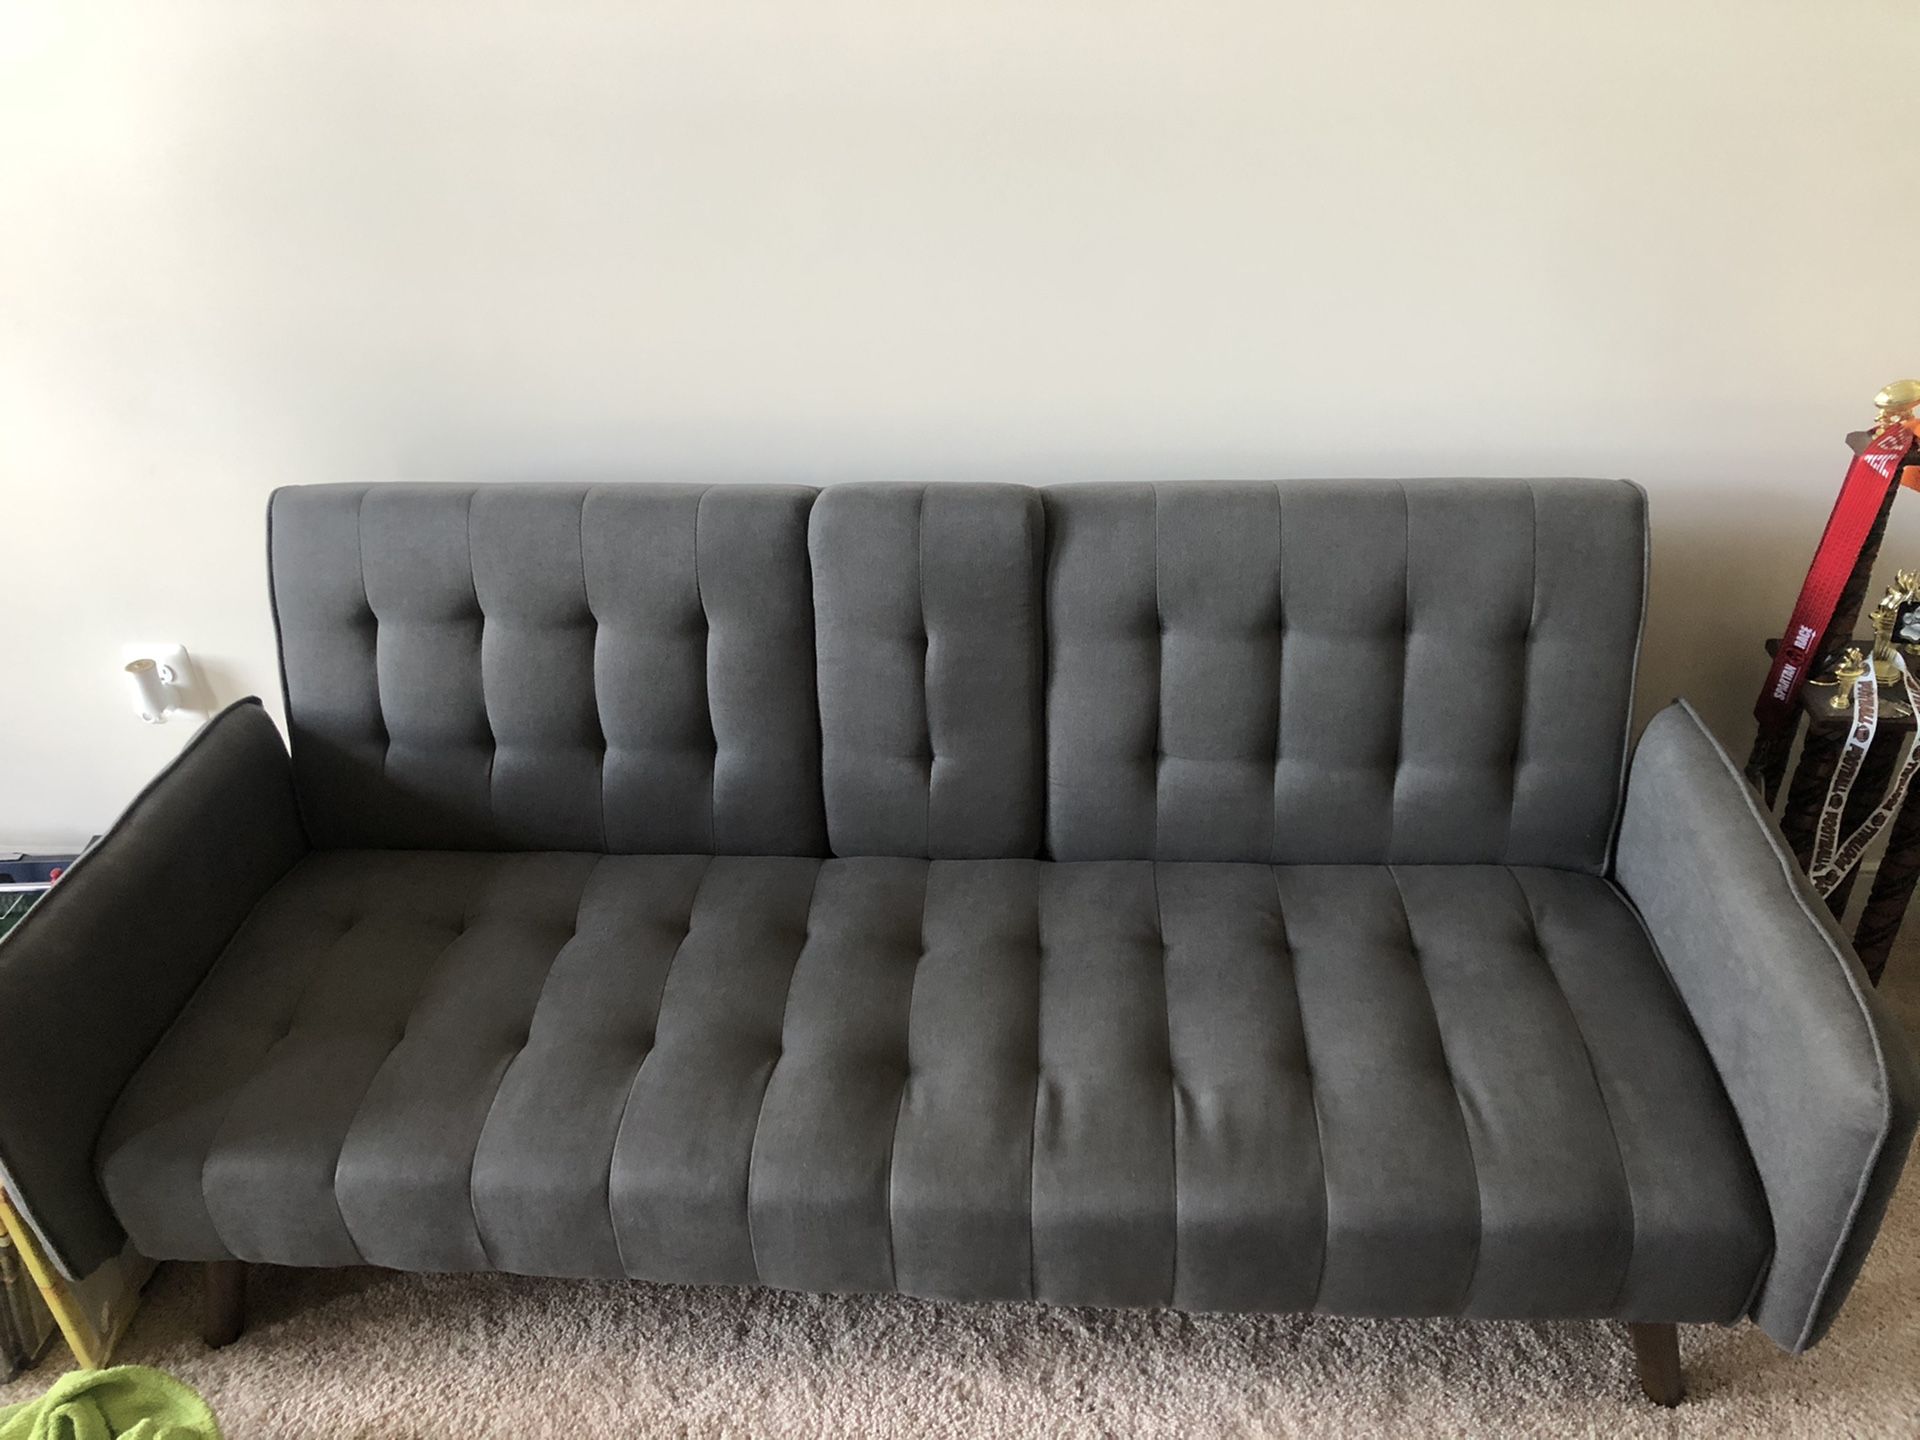 Futon sofa from Wayfair